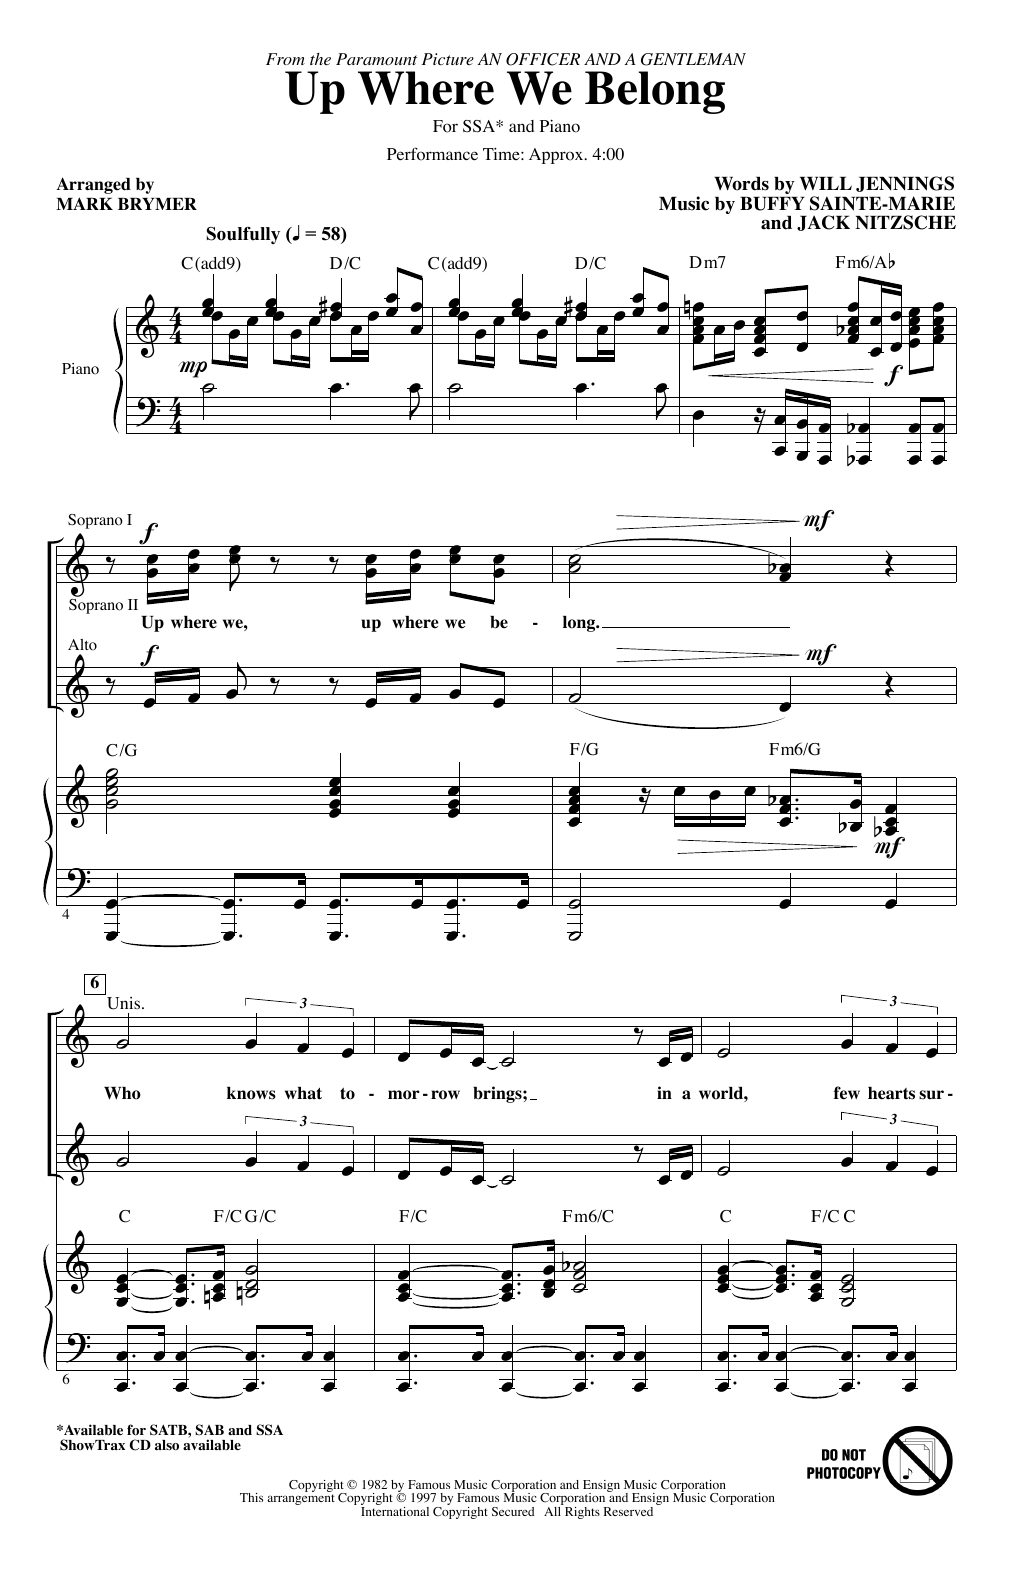 Download Joe Cocker & Jennifer Warnes Up Where We Belong (arr. Mark Brymer) Sheet Music and learn how to play SATB Choir PDF digital score in minutes